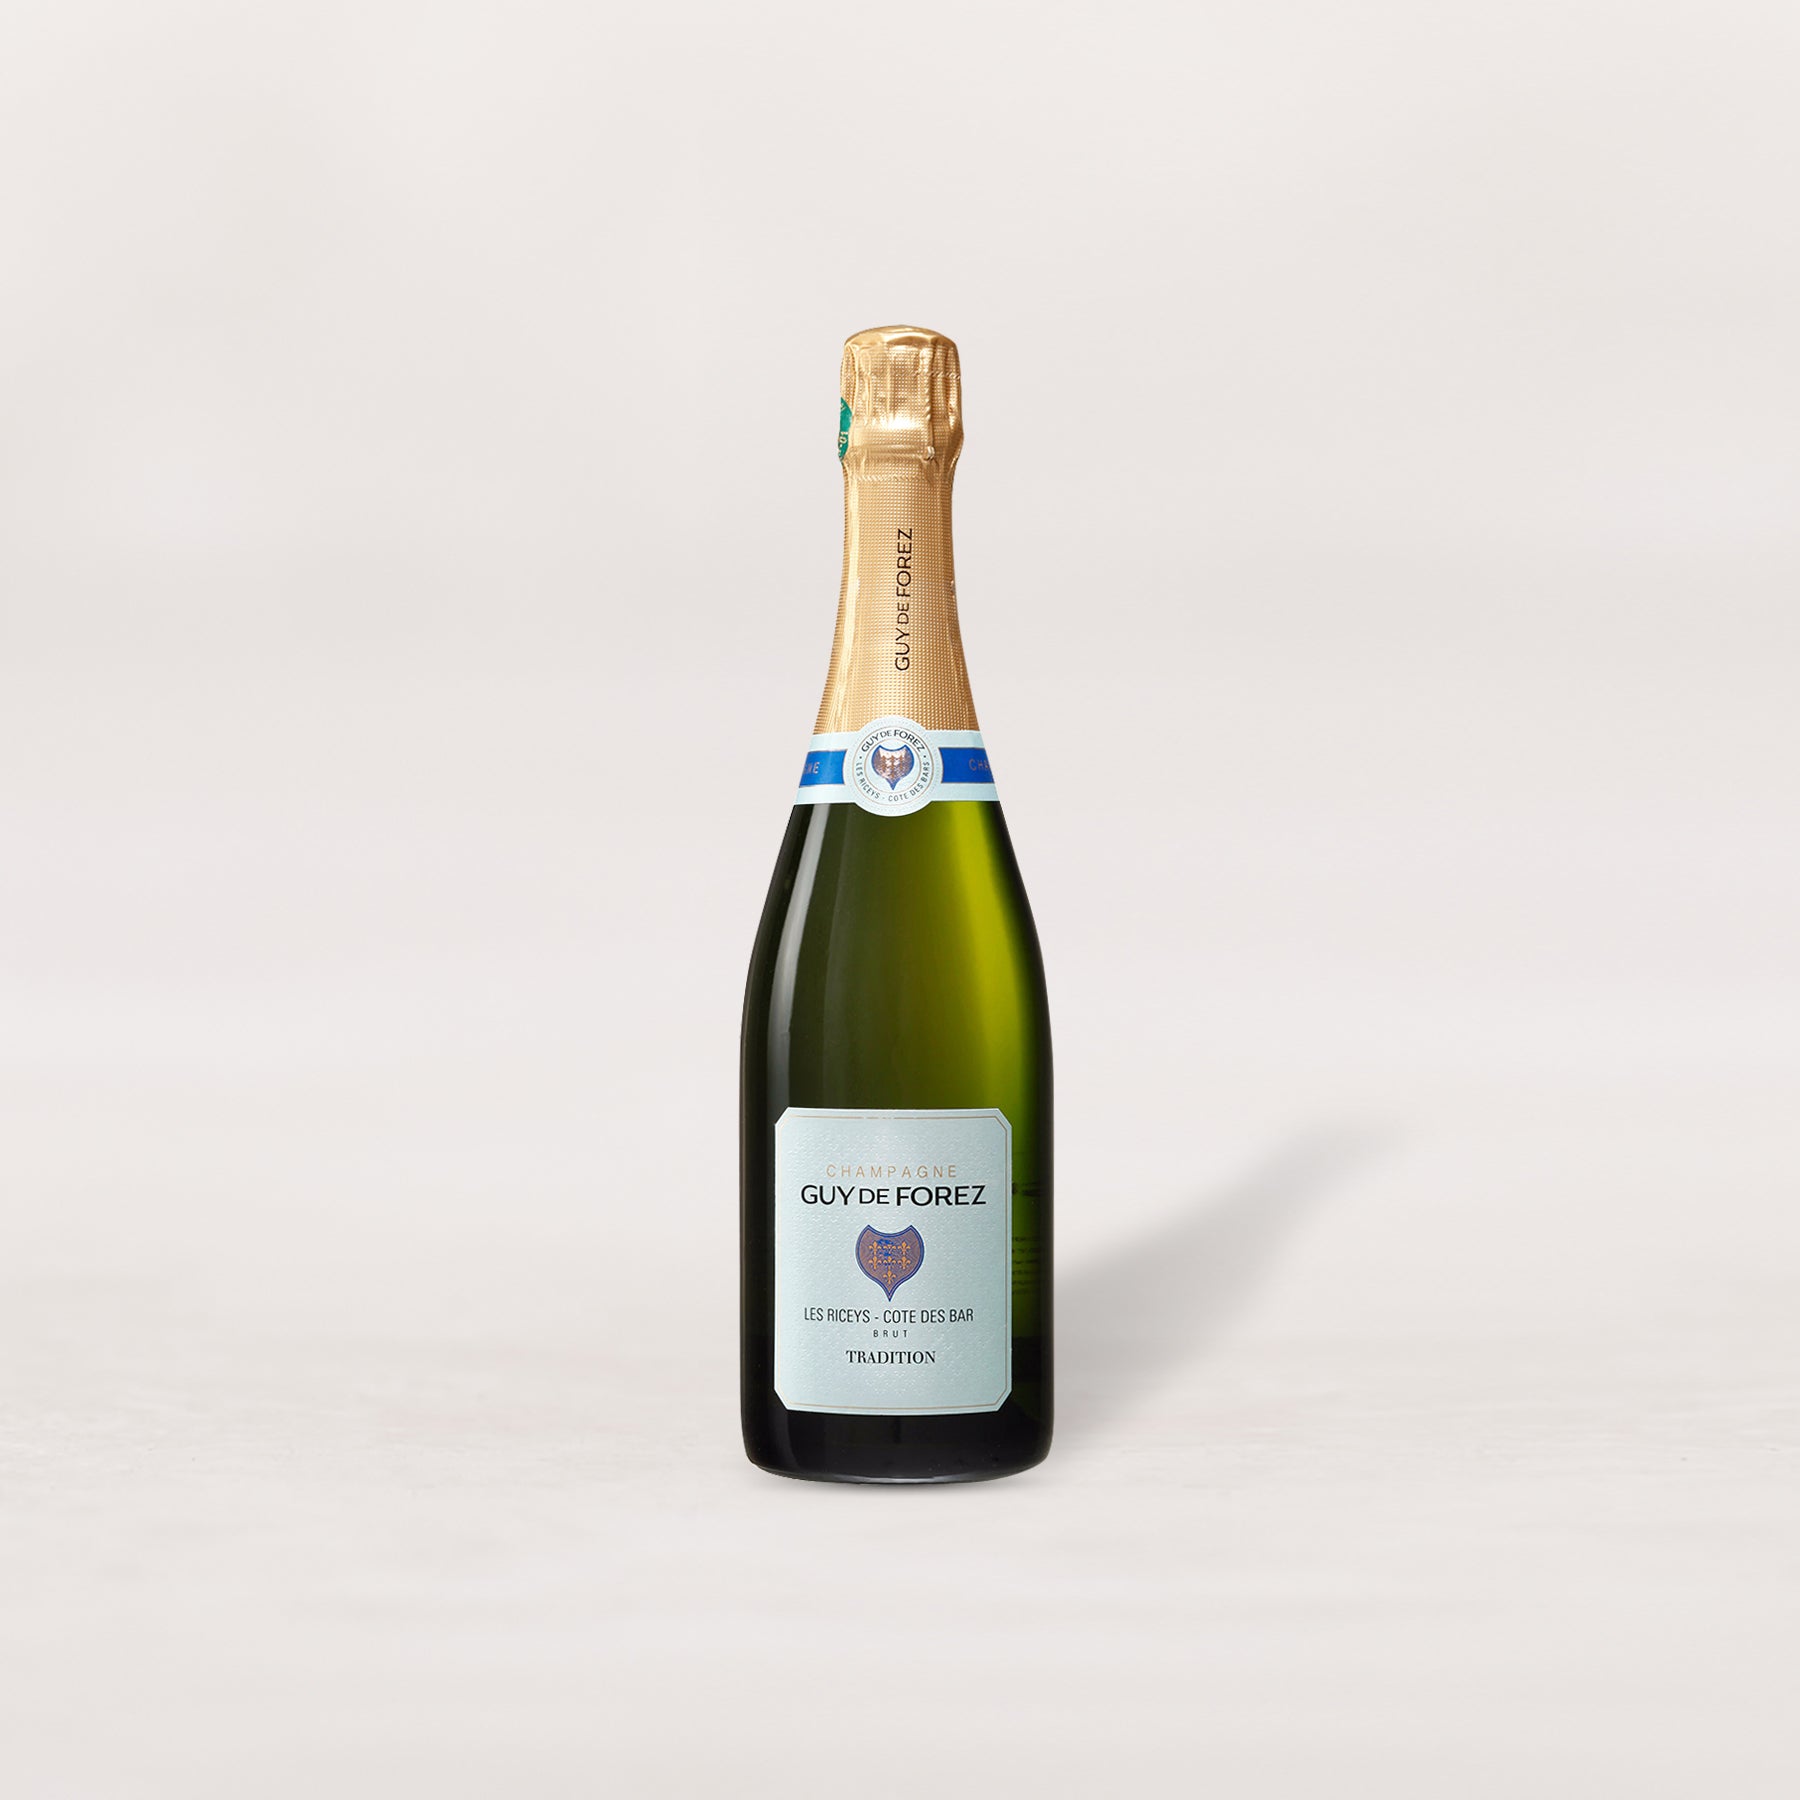 MV Guy de Forez, Champagne Brut Tradition